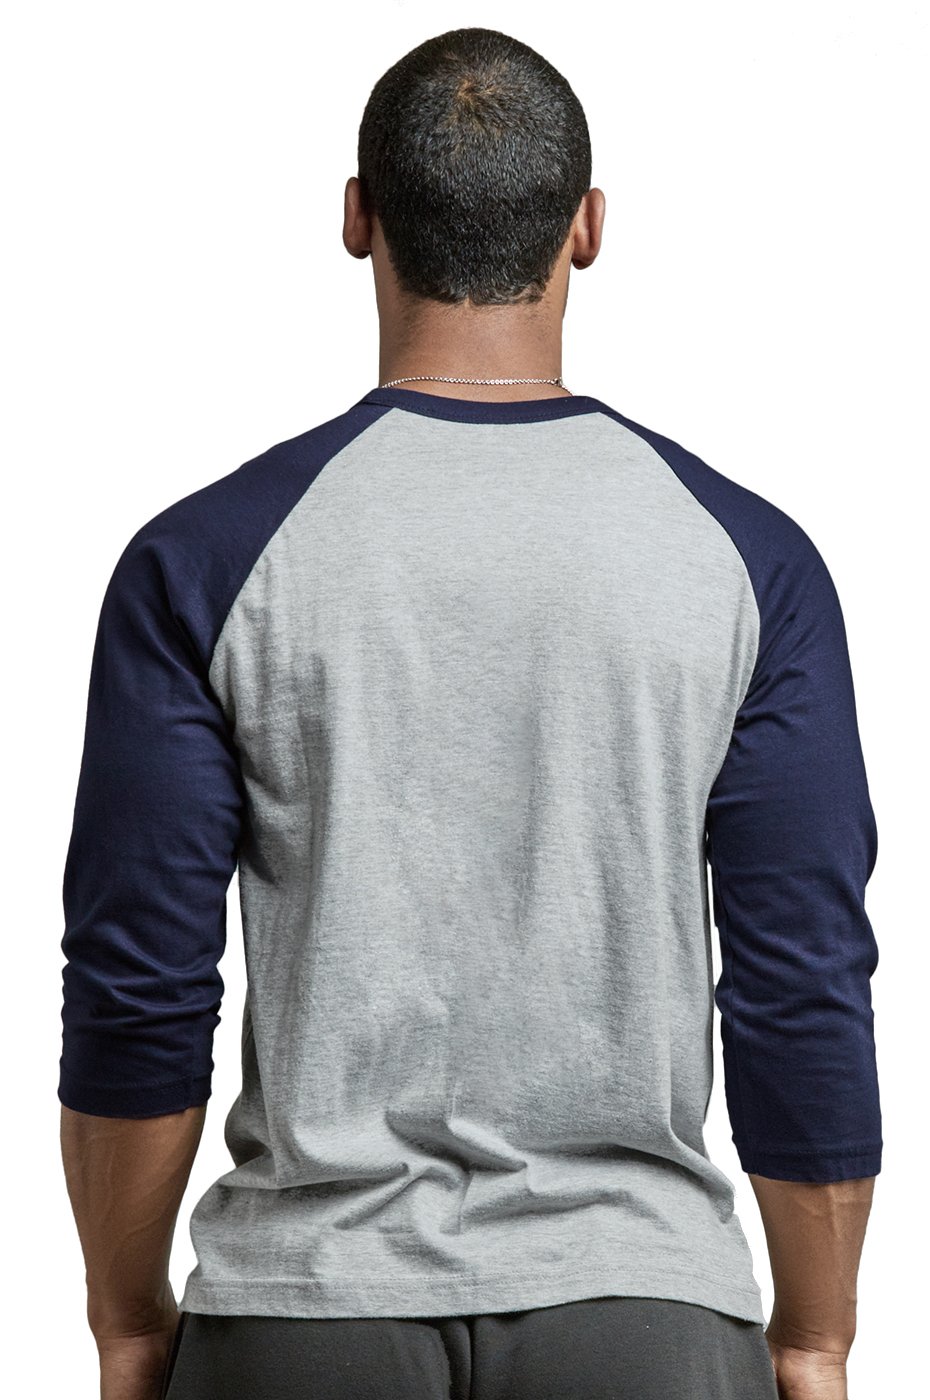 TOP PRO Men's 3/4 Sleeve Casual Raglan Jersey Baseball Tee Shirt